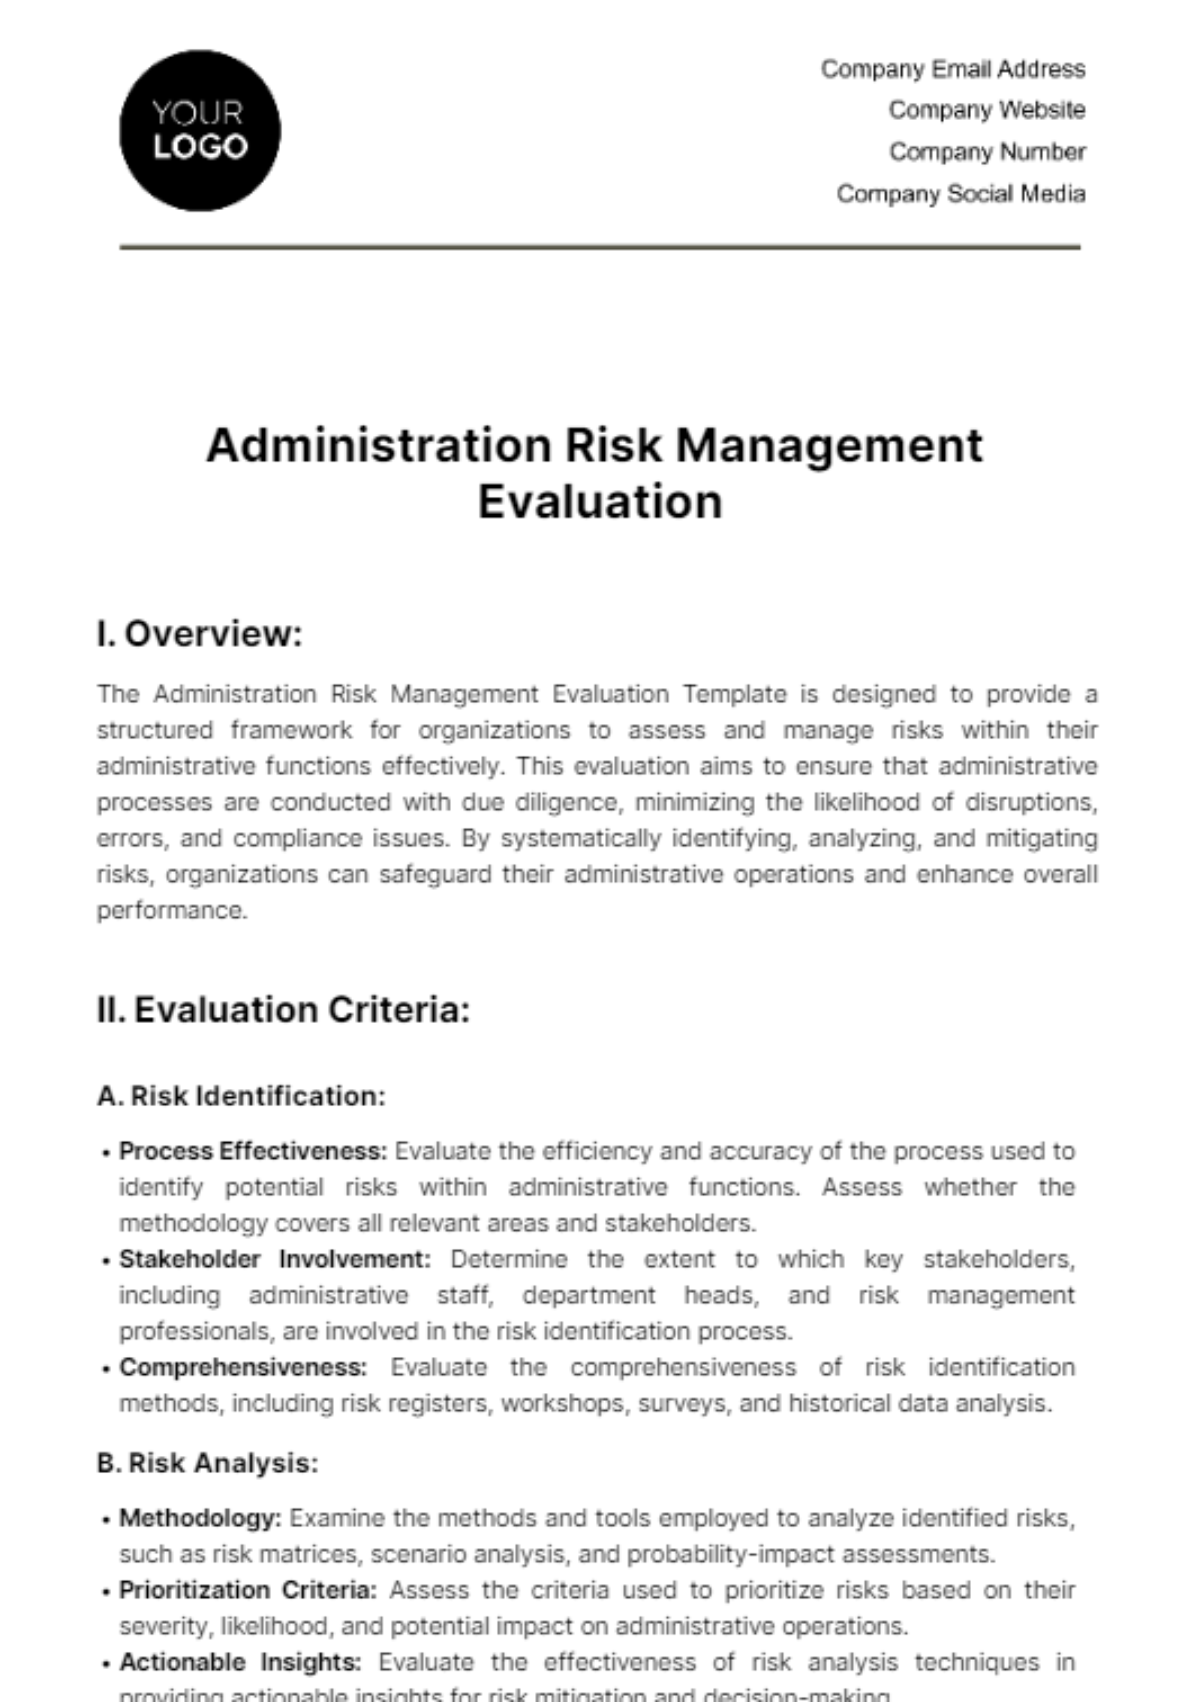 Administration Risk Management Evaluation Template